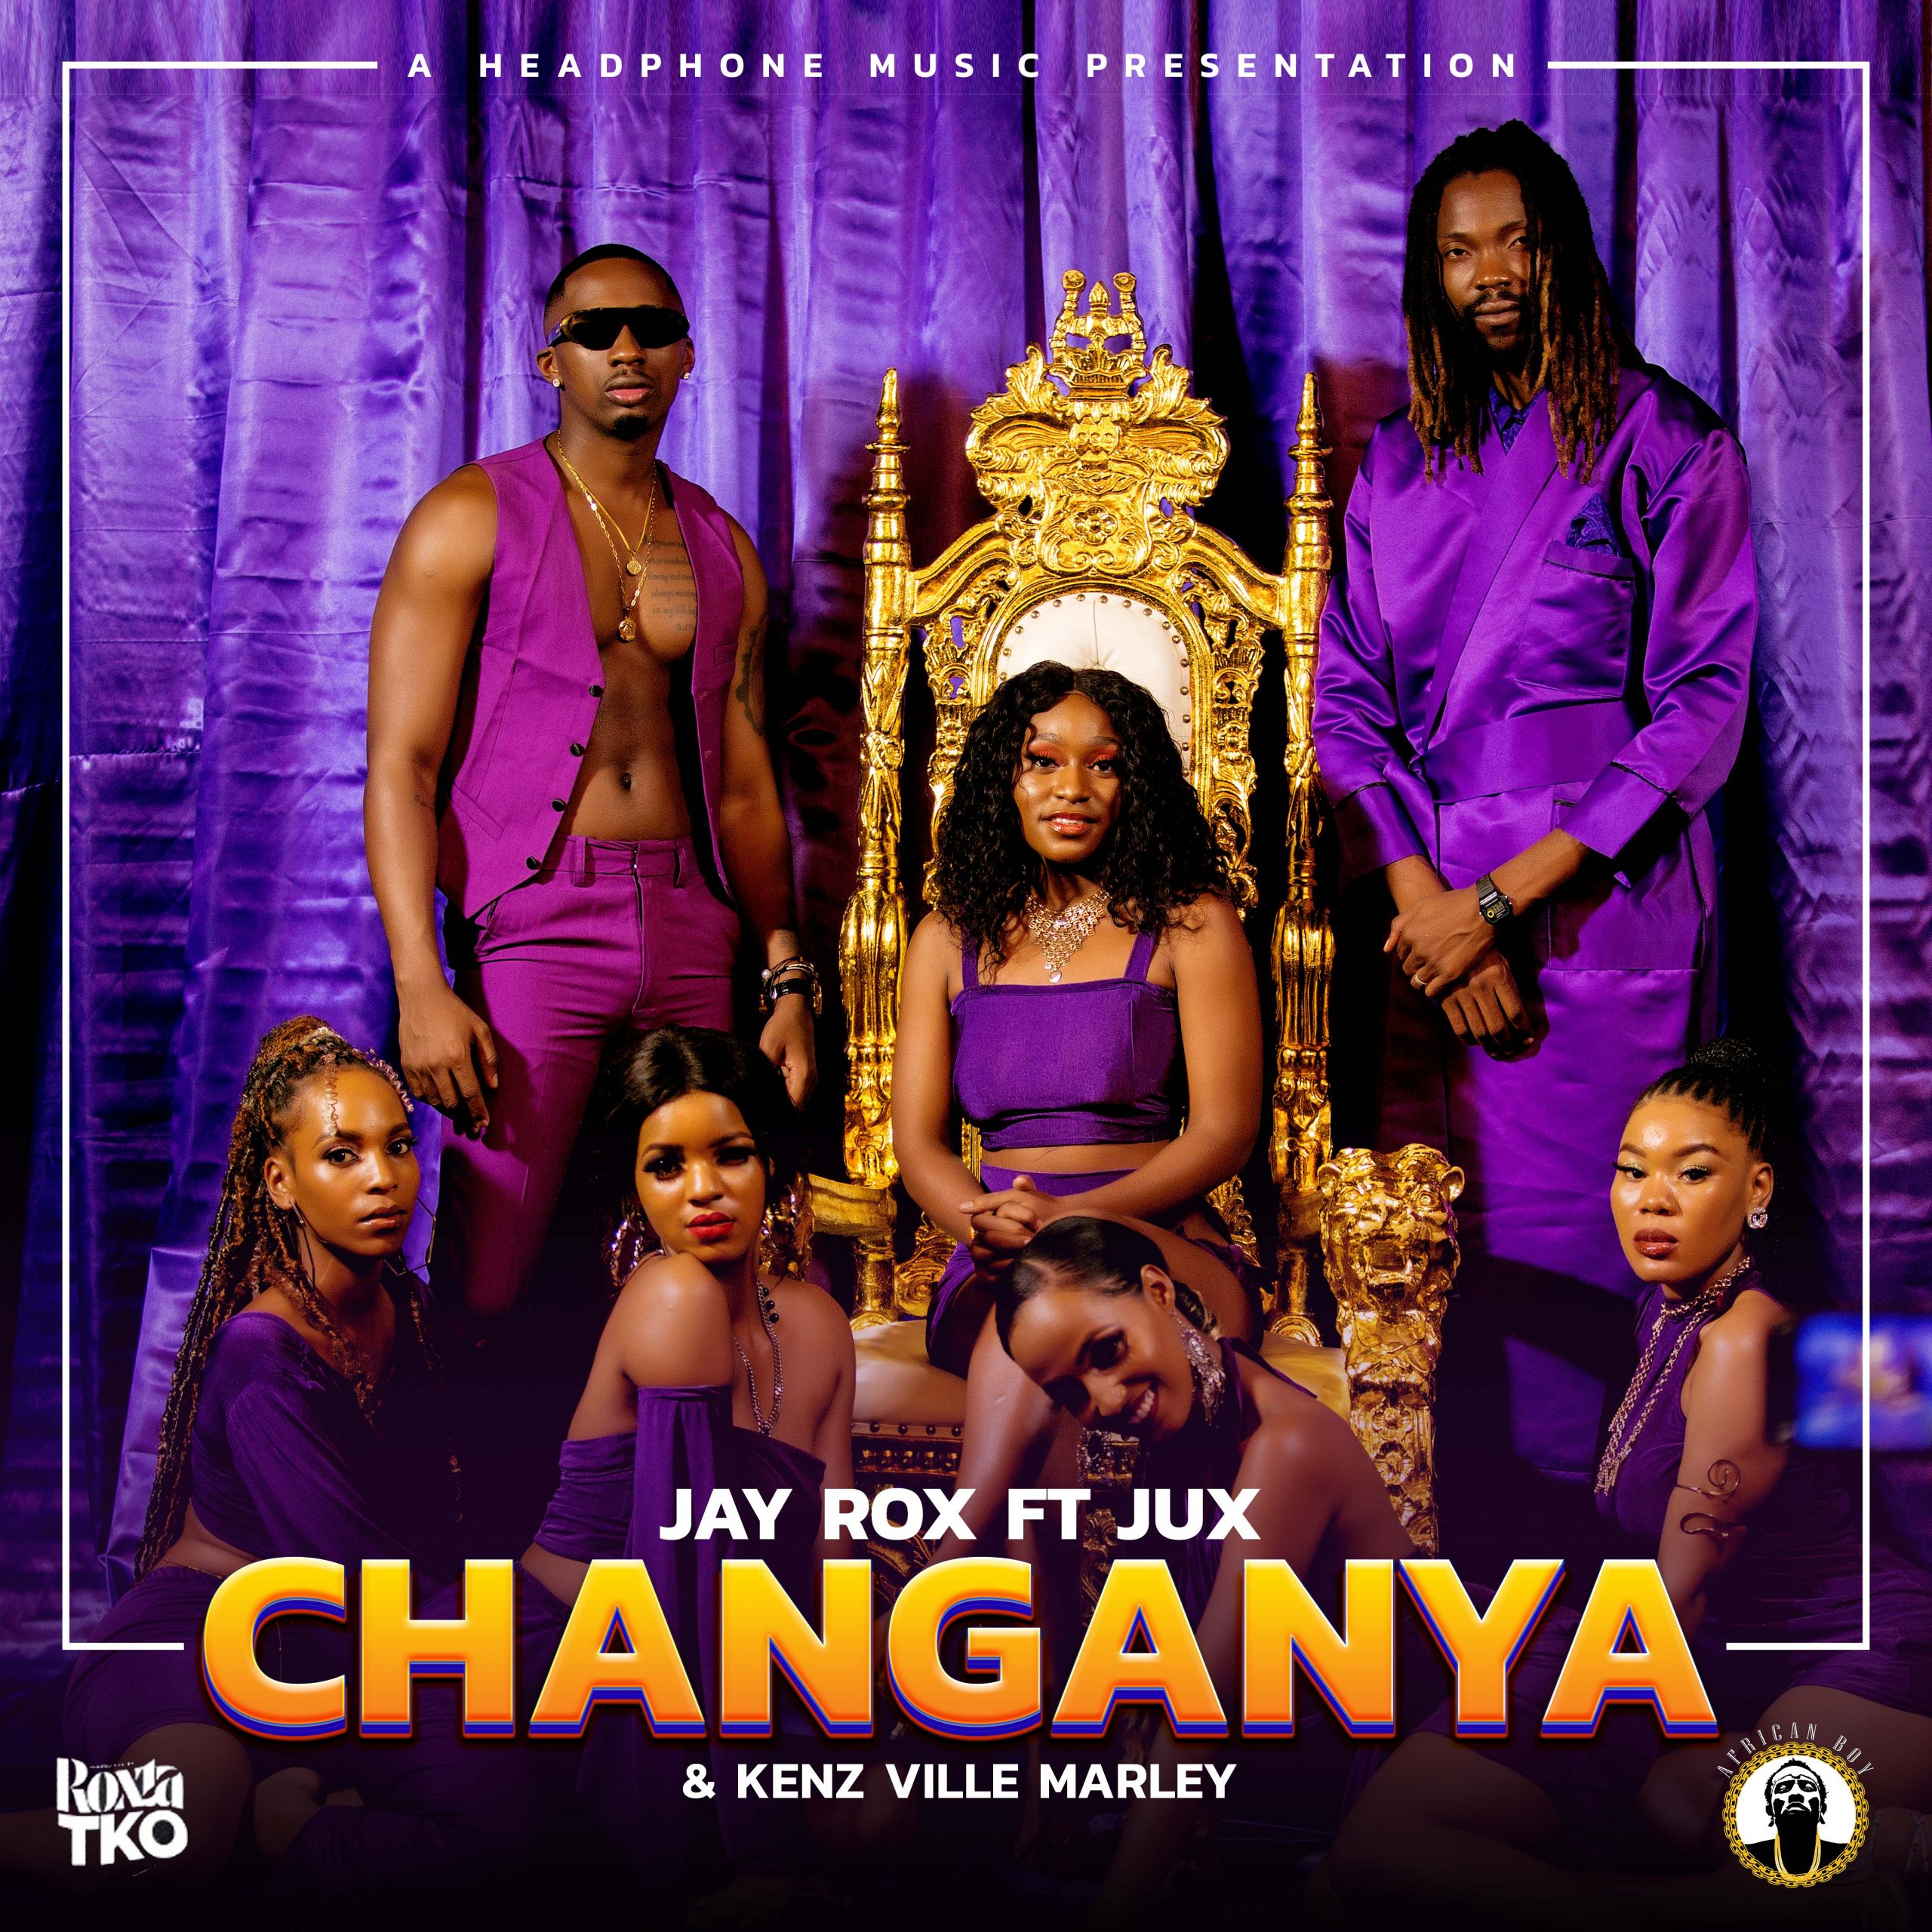 Jay Rox ft. Jux & Kenz Ville Marley - "Changanya" Mp3